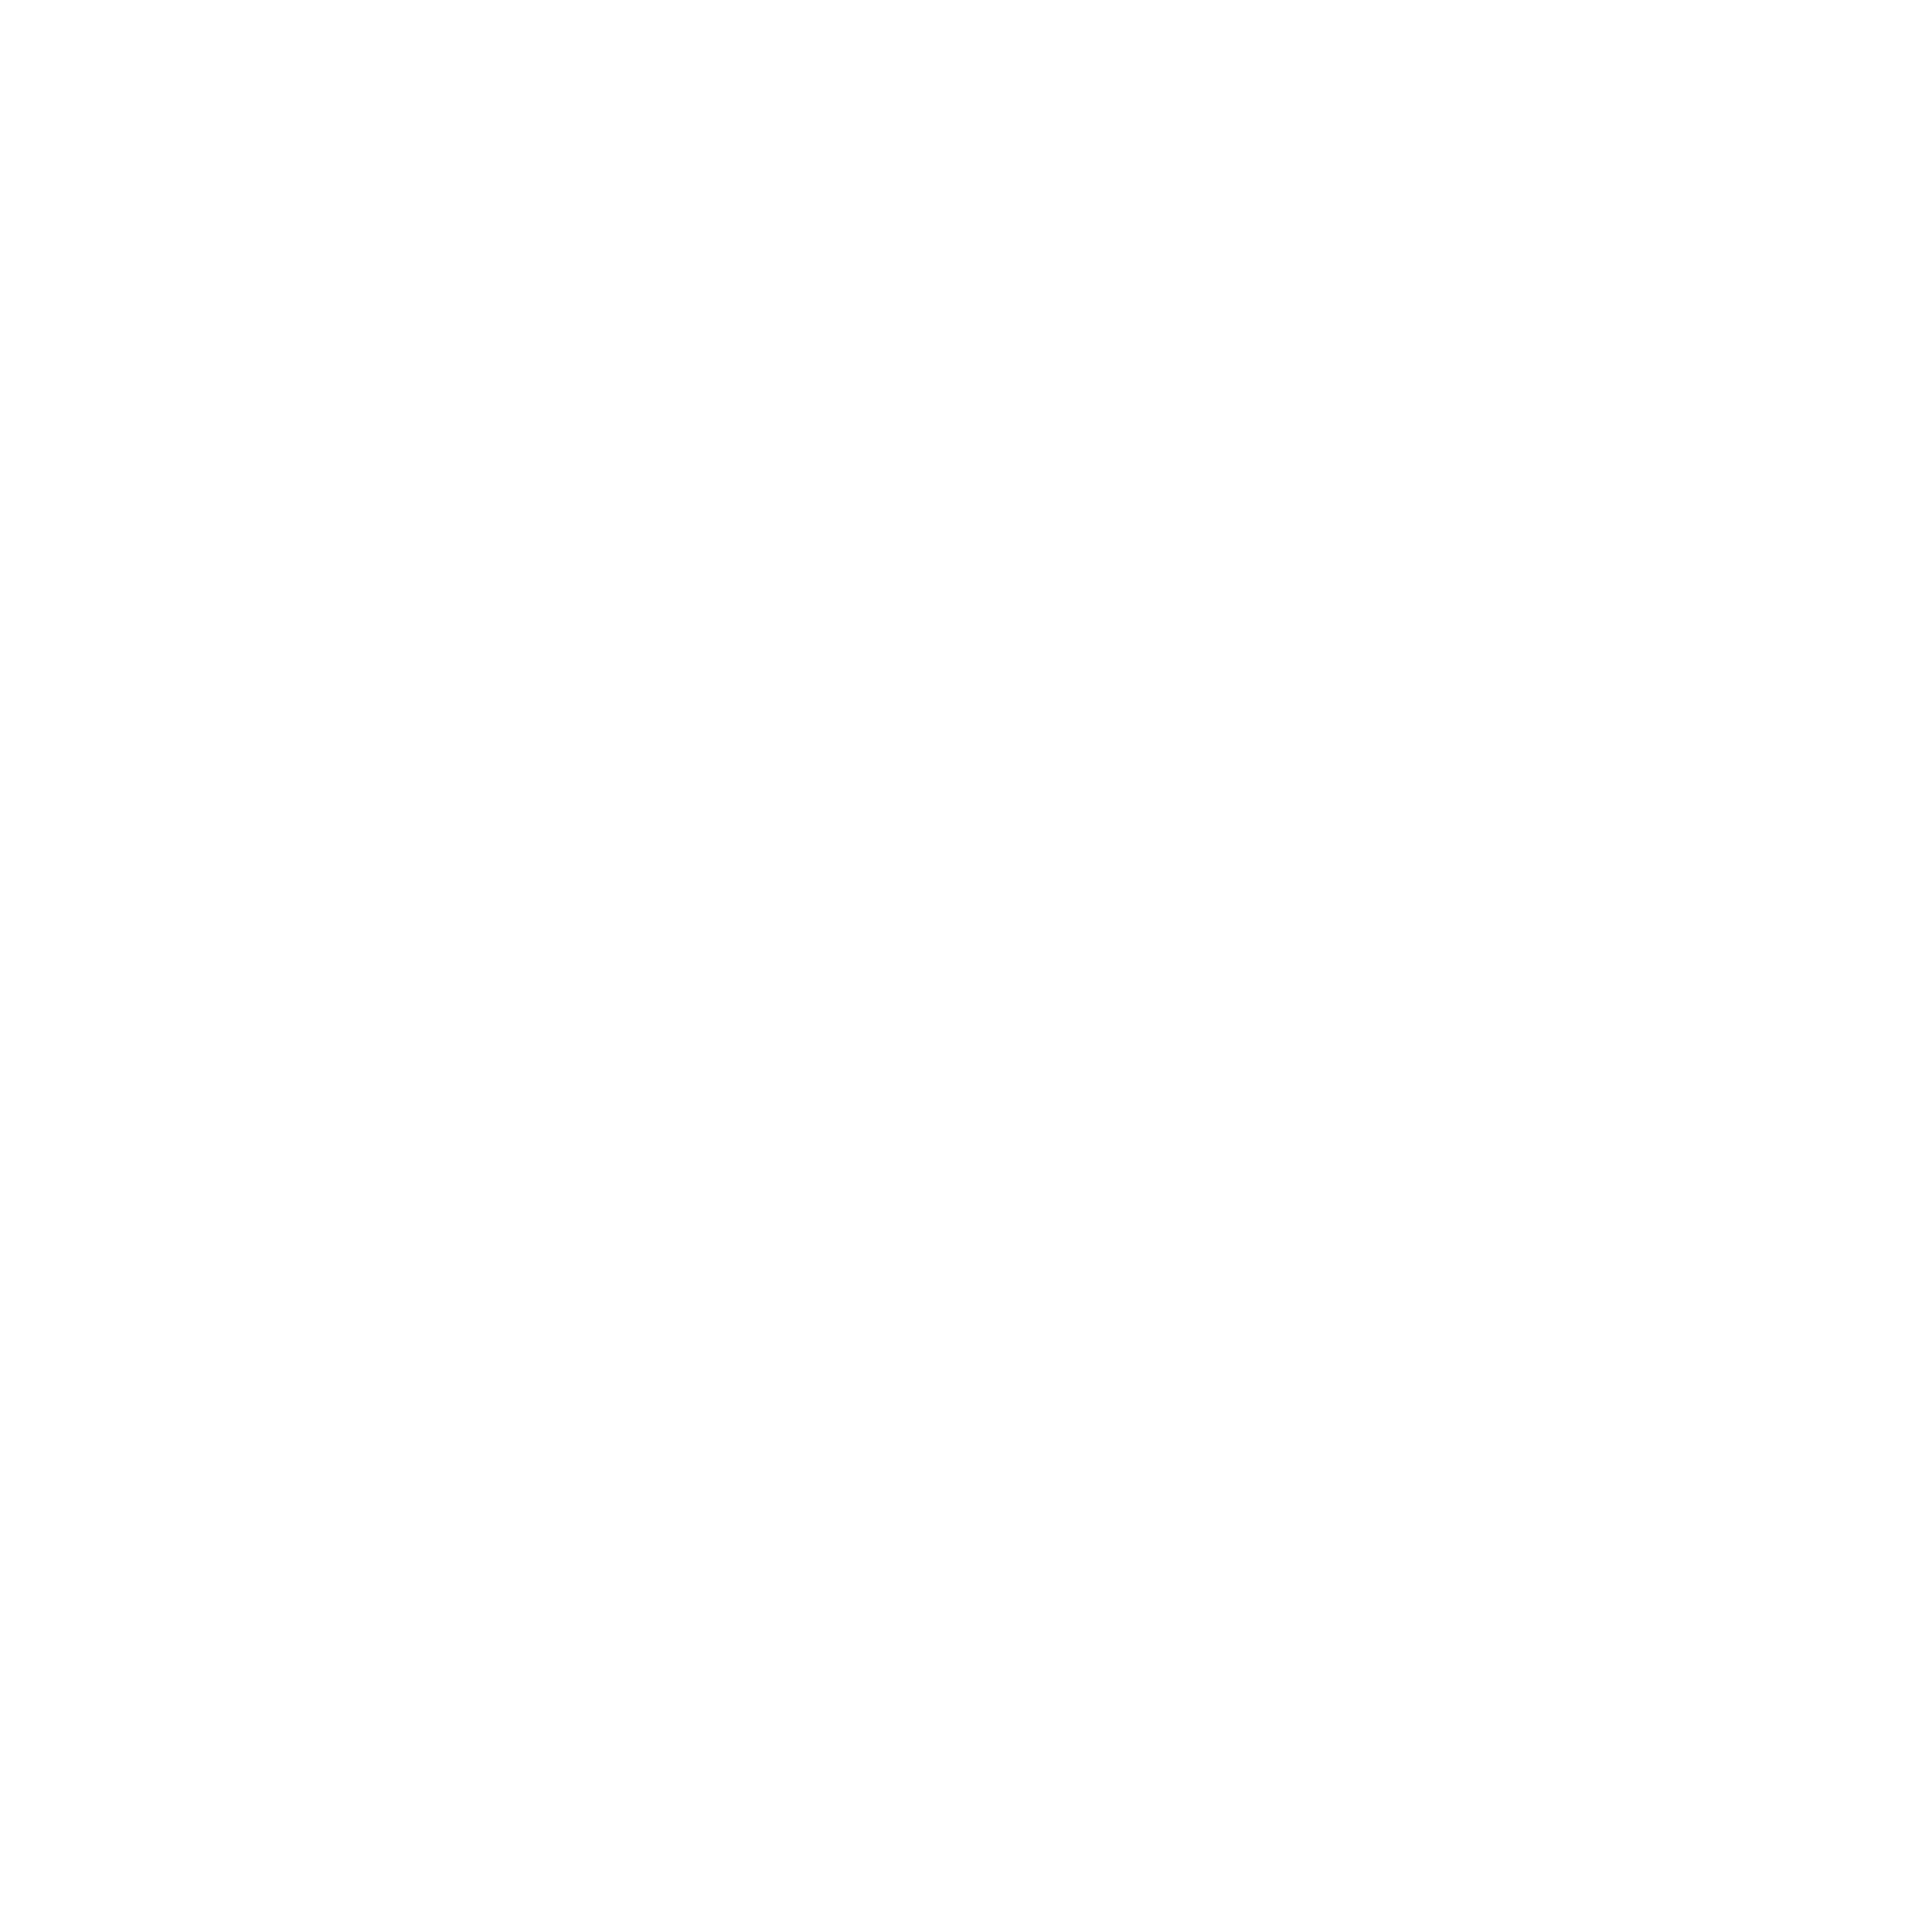 Hill's Healing Waves logo white